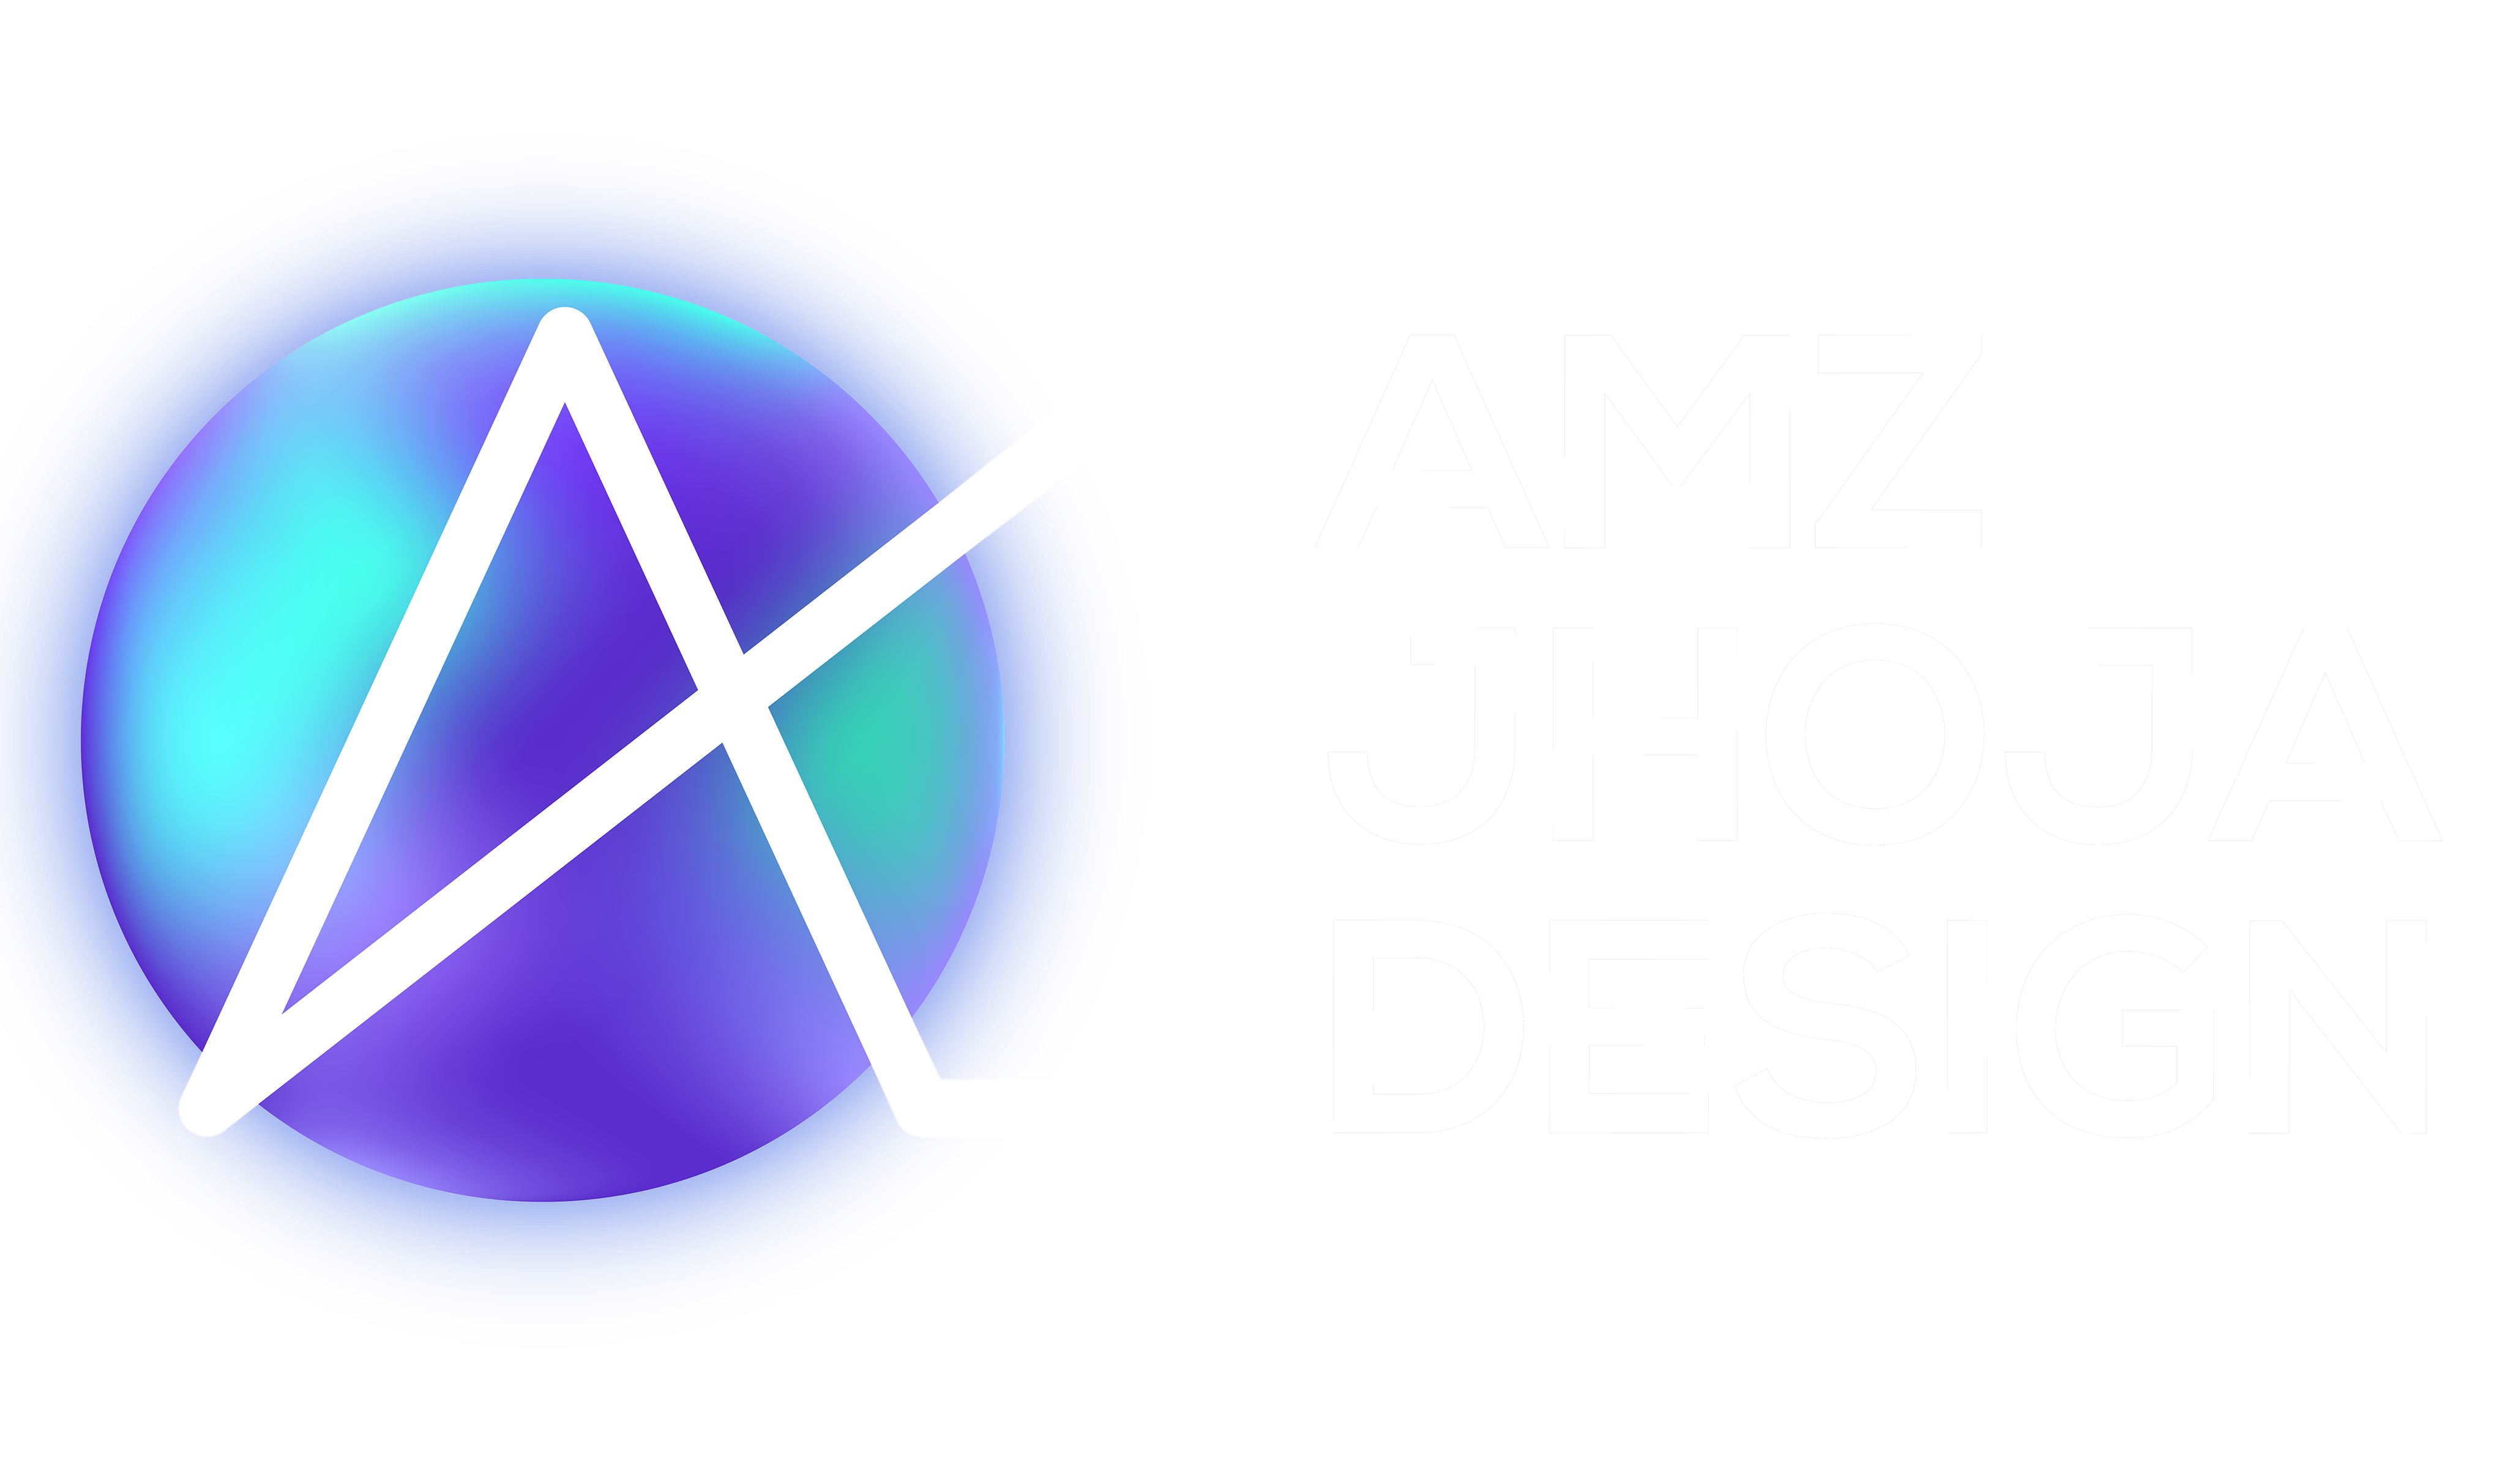 Amz Jhoja Designs